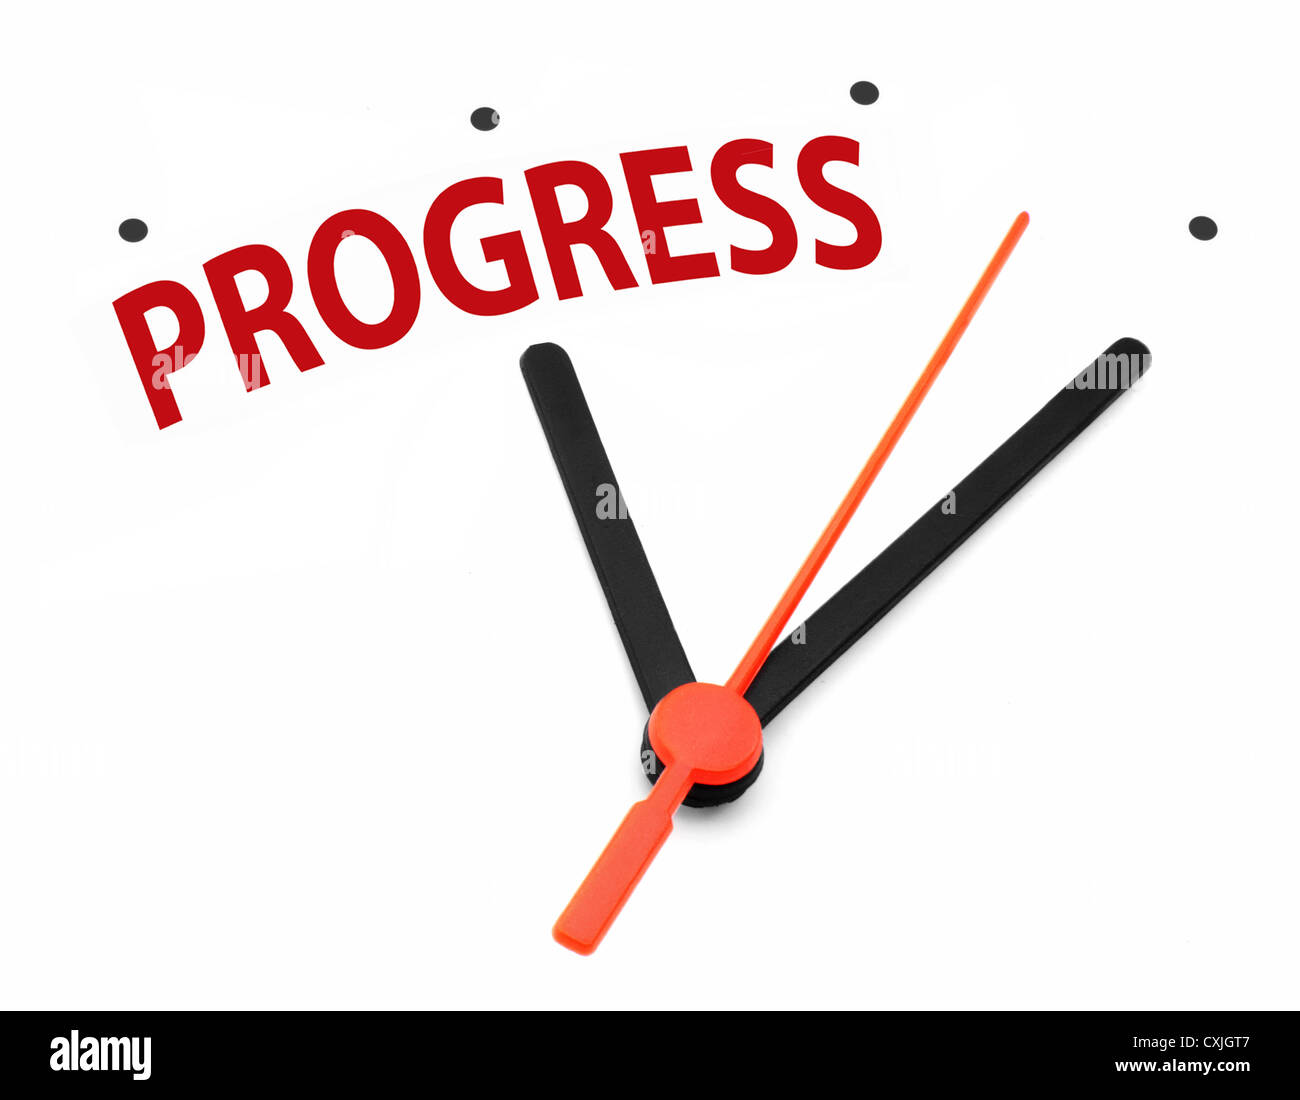 Time for progress Stock Photo